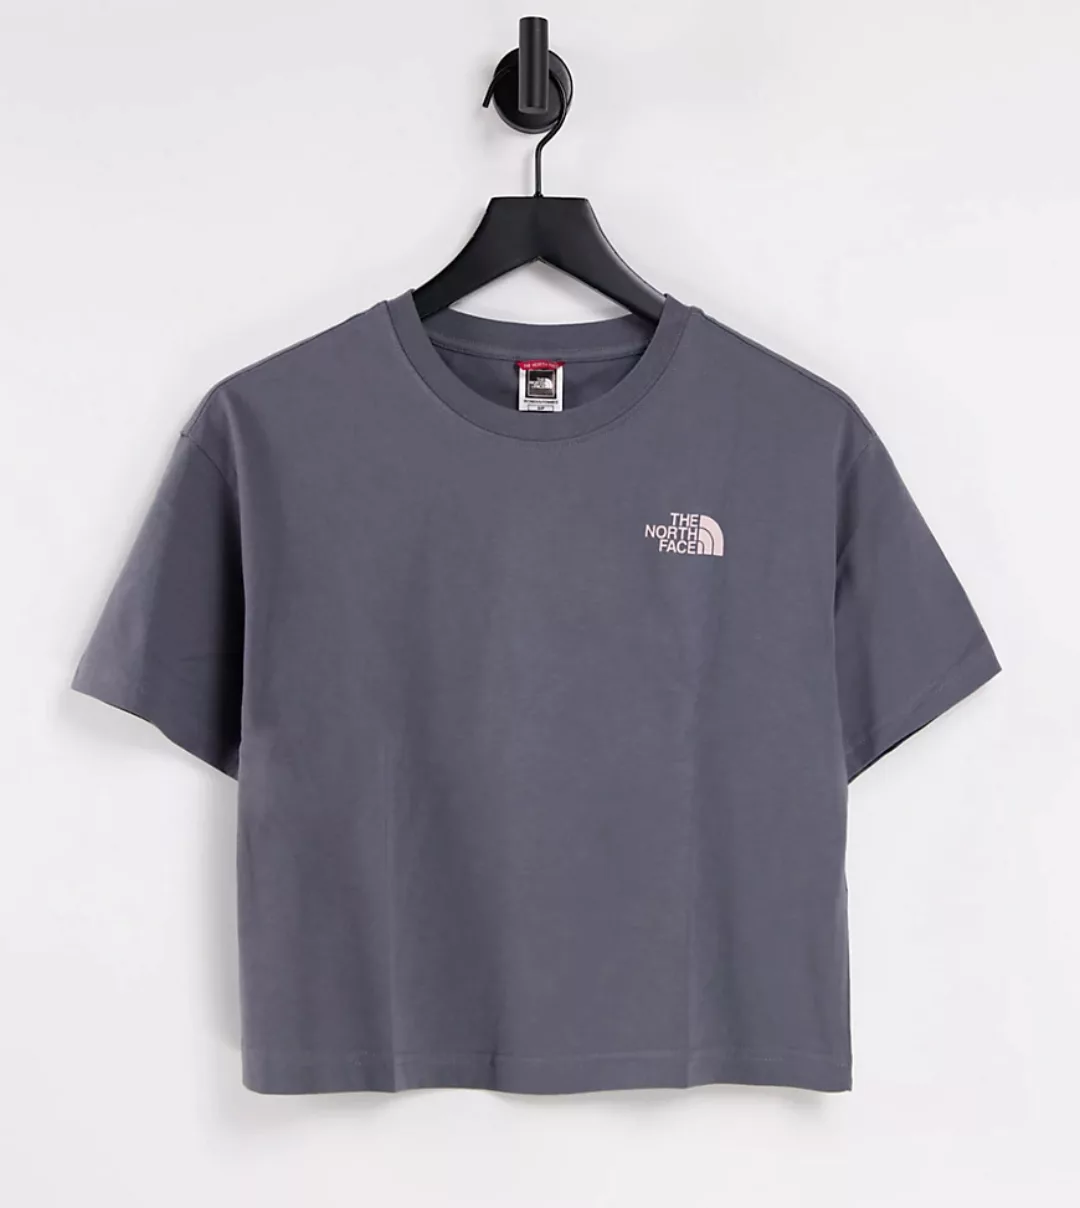 The North Face – Simple Dome – Kurzes T-Shirt in Grau/Rosa, exklusiv bei AS günstig online kaufen